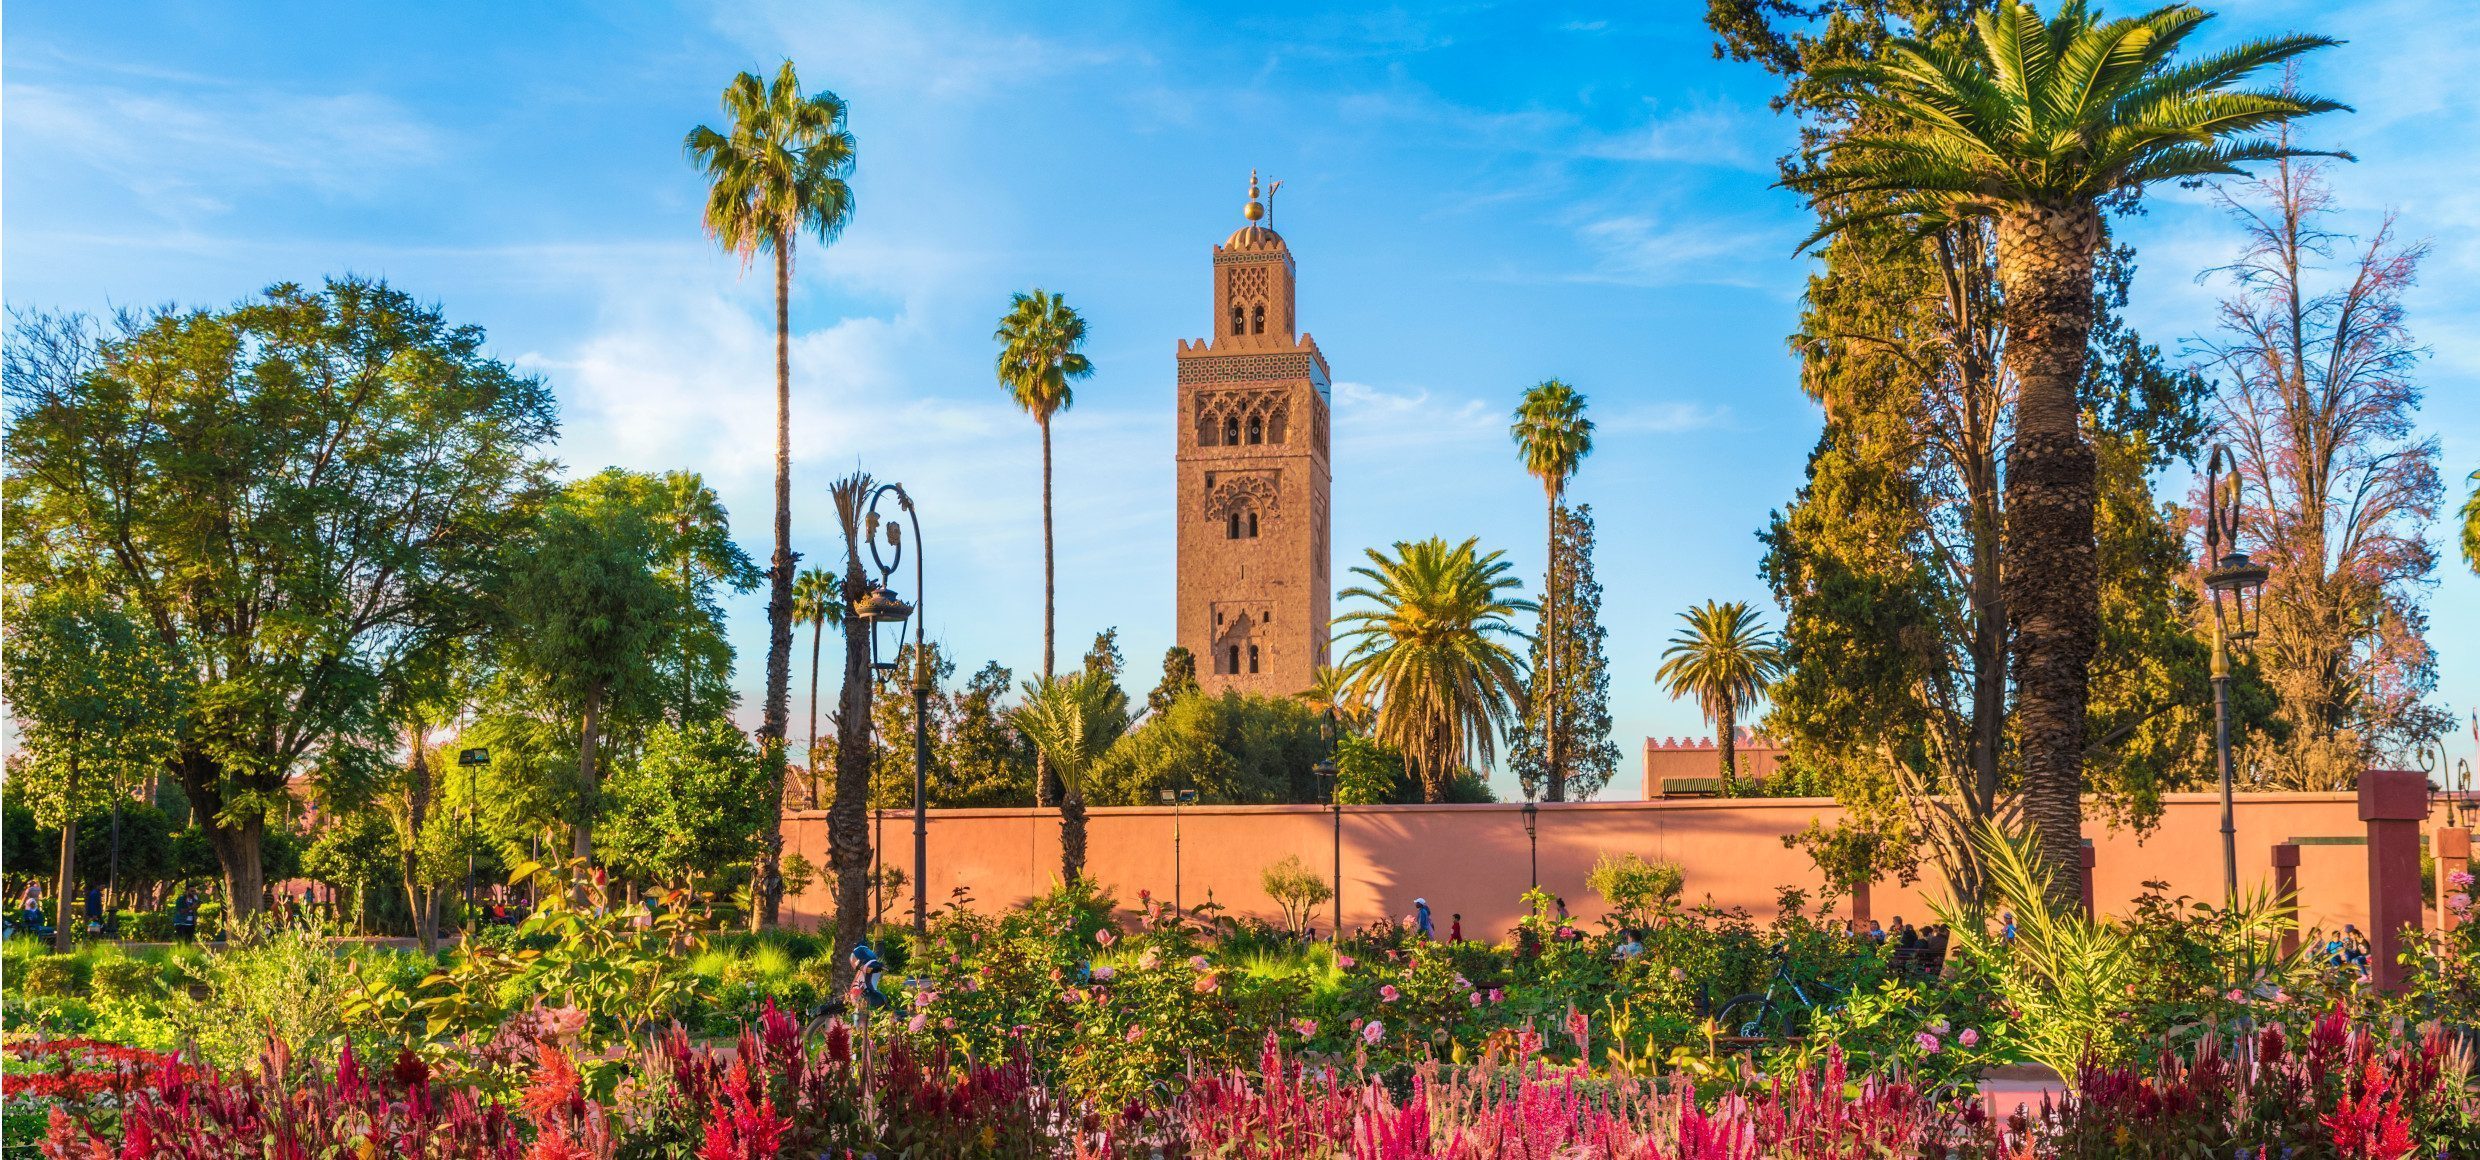 marokko-marrakesch-Kulturreise